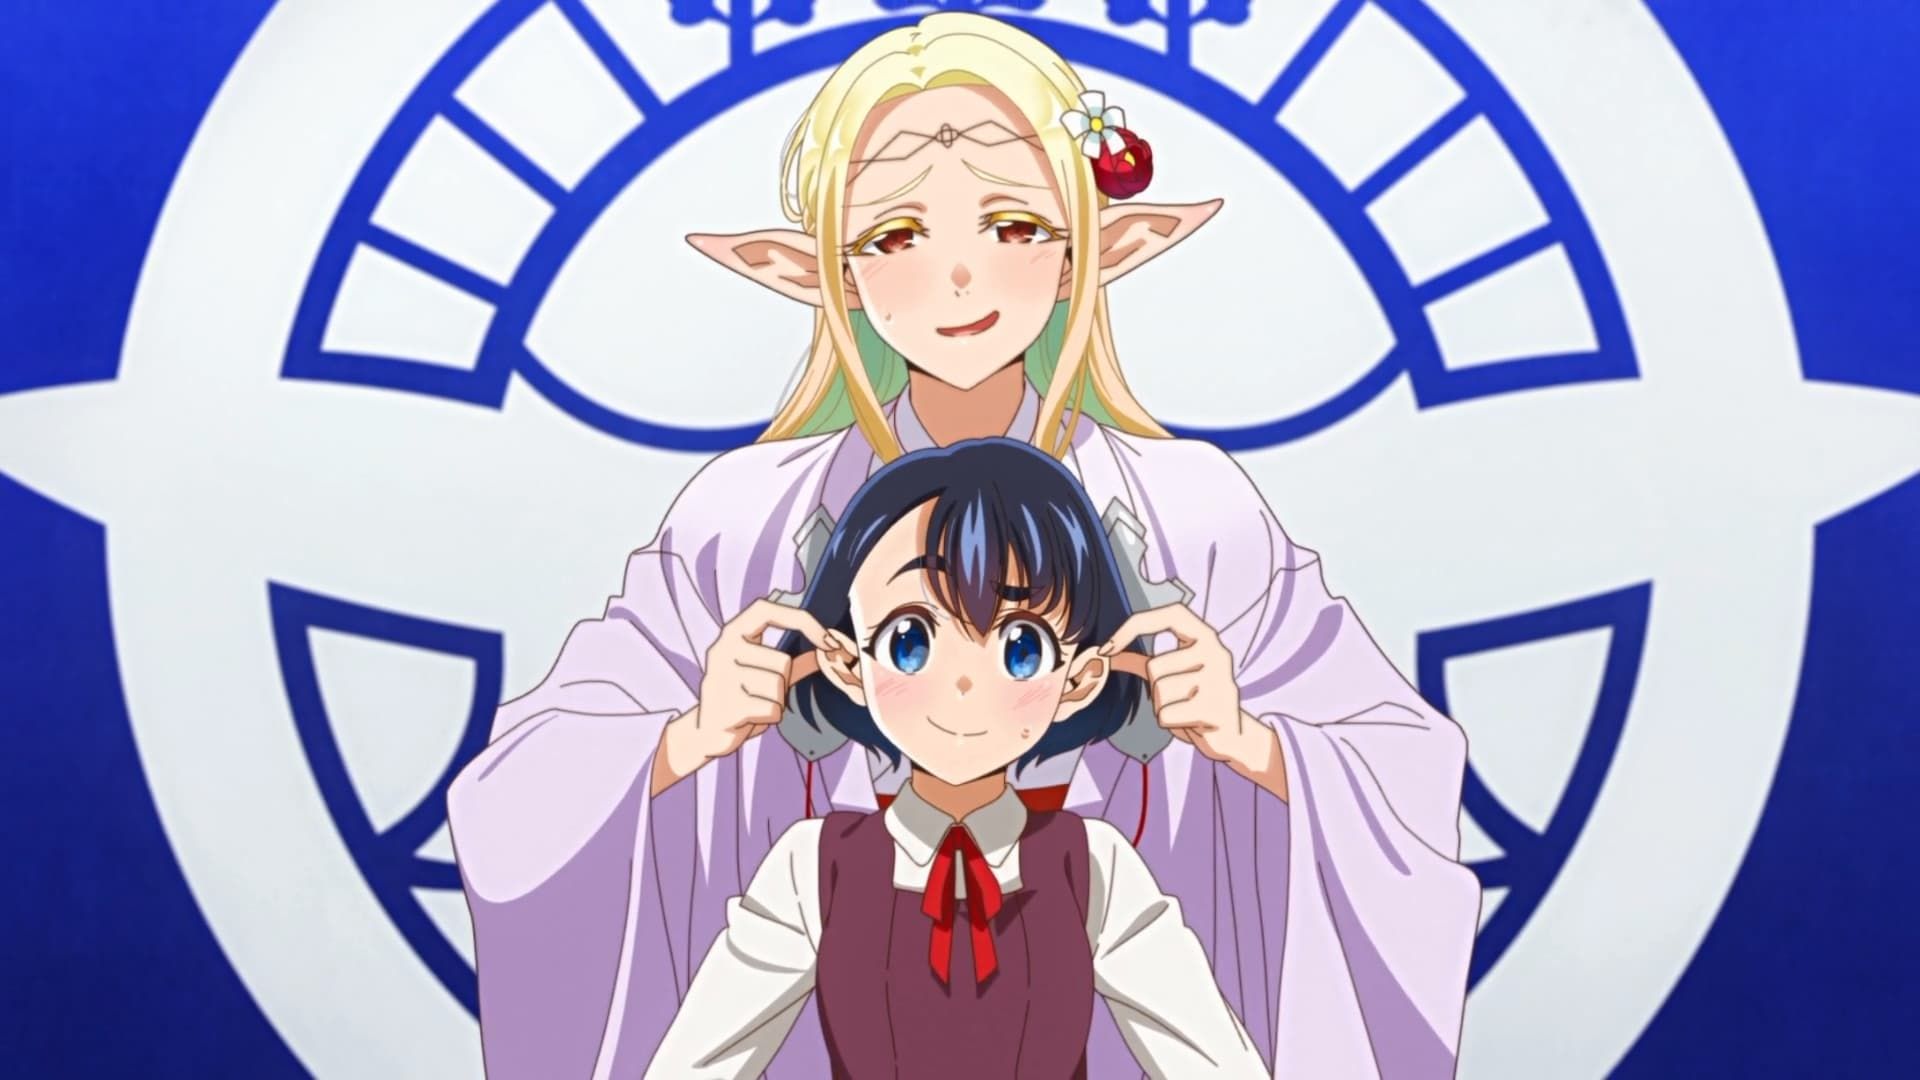 Otaku Elf Anime Elenco Teru Ikuta, Rie Kugimiya - All Things Anime